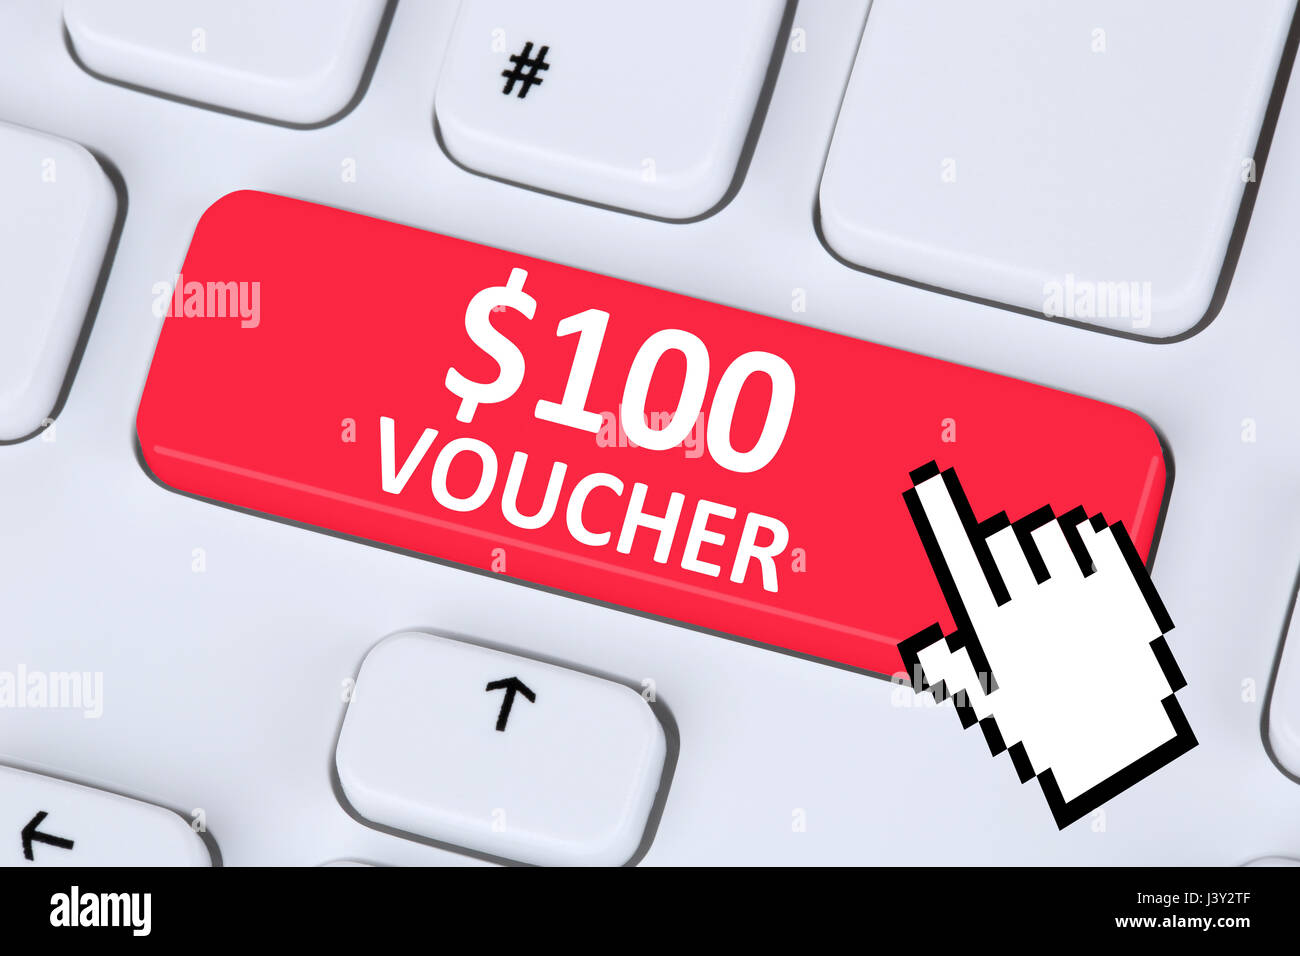 100 Dollar voucher gift discount sale online shopping internet shop computer Stock Photo